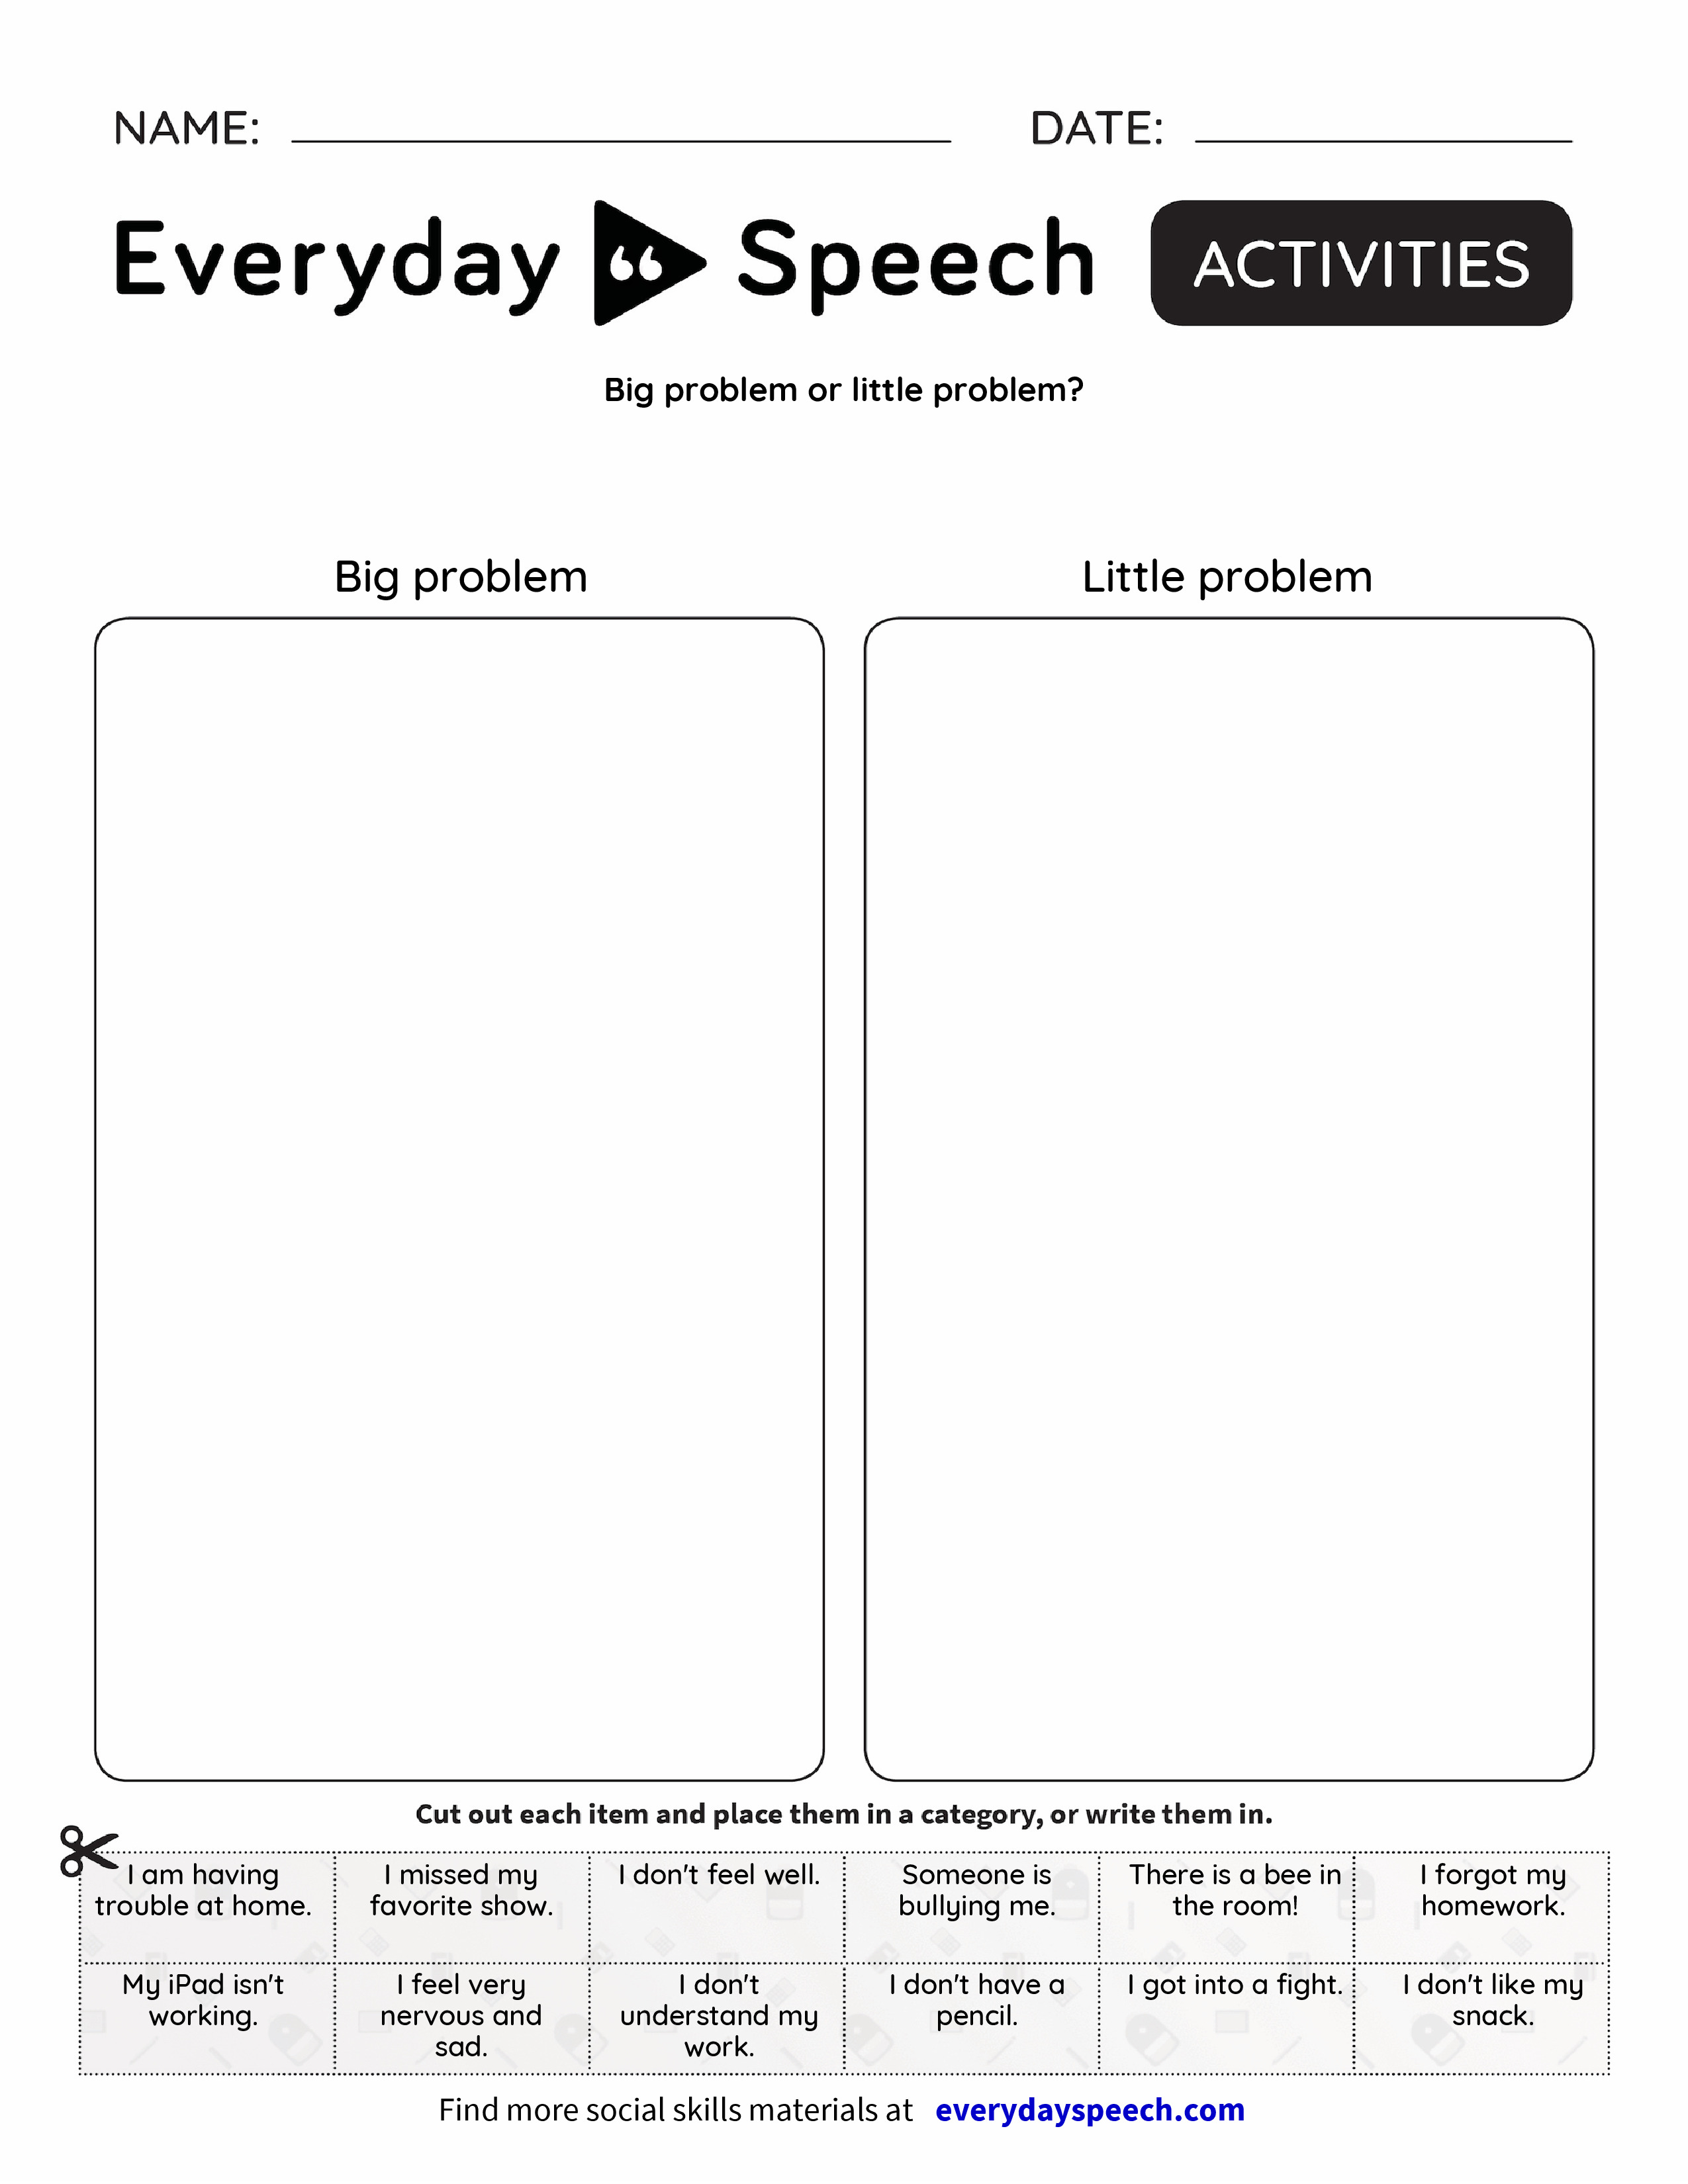 big-problem-or-little-problem-everyday-speech-everyday-speech